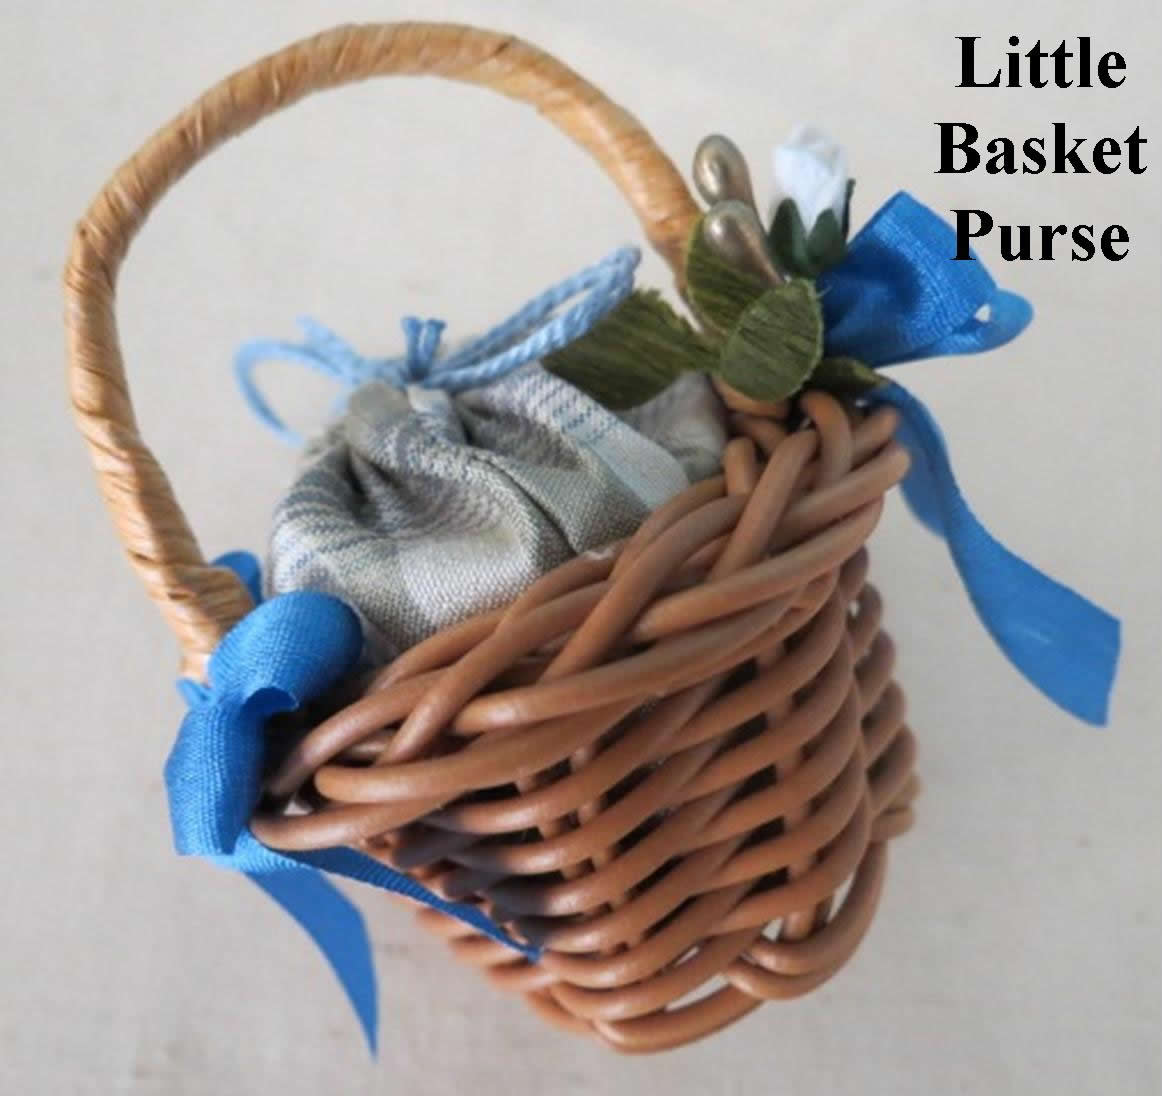 Little Basket Purse   •   Saturday, August 6th, 2:15 pm